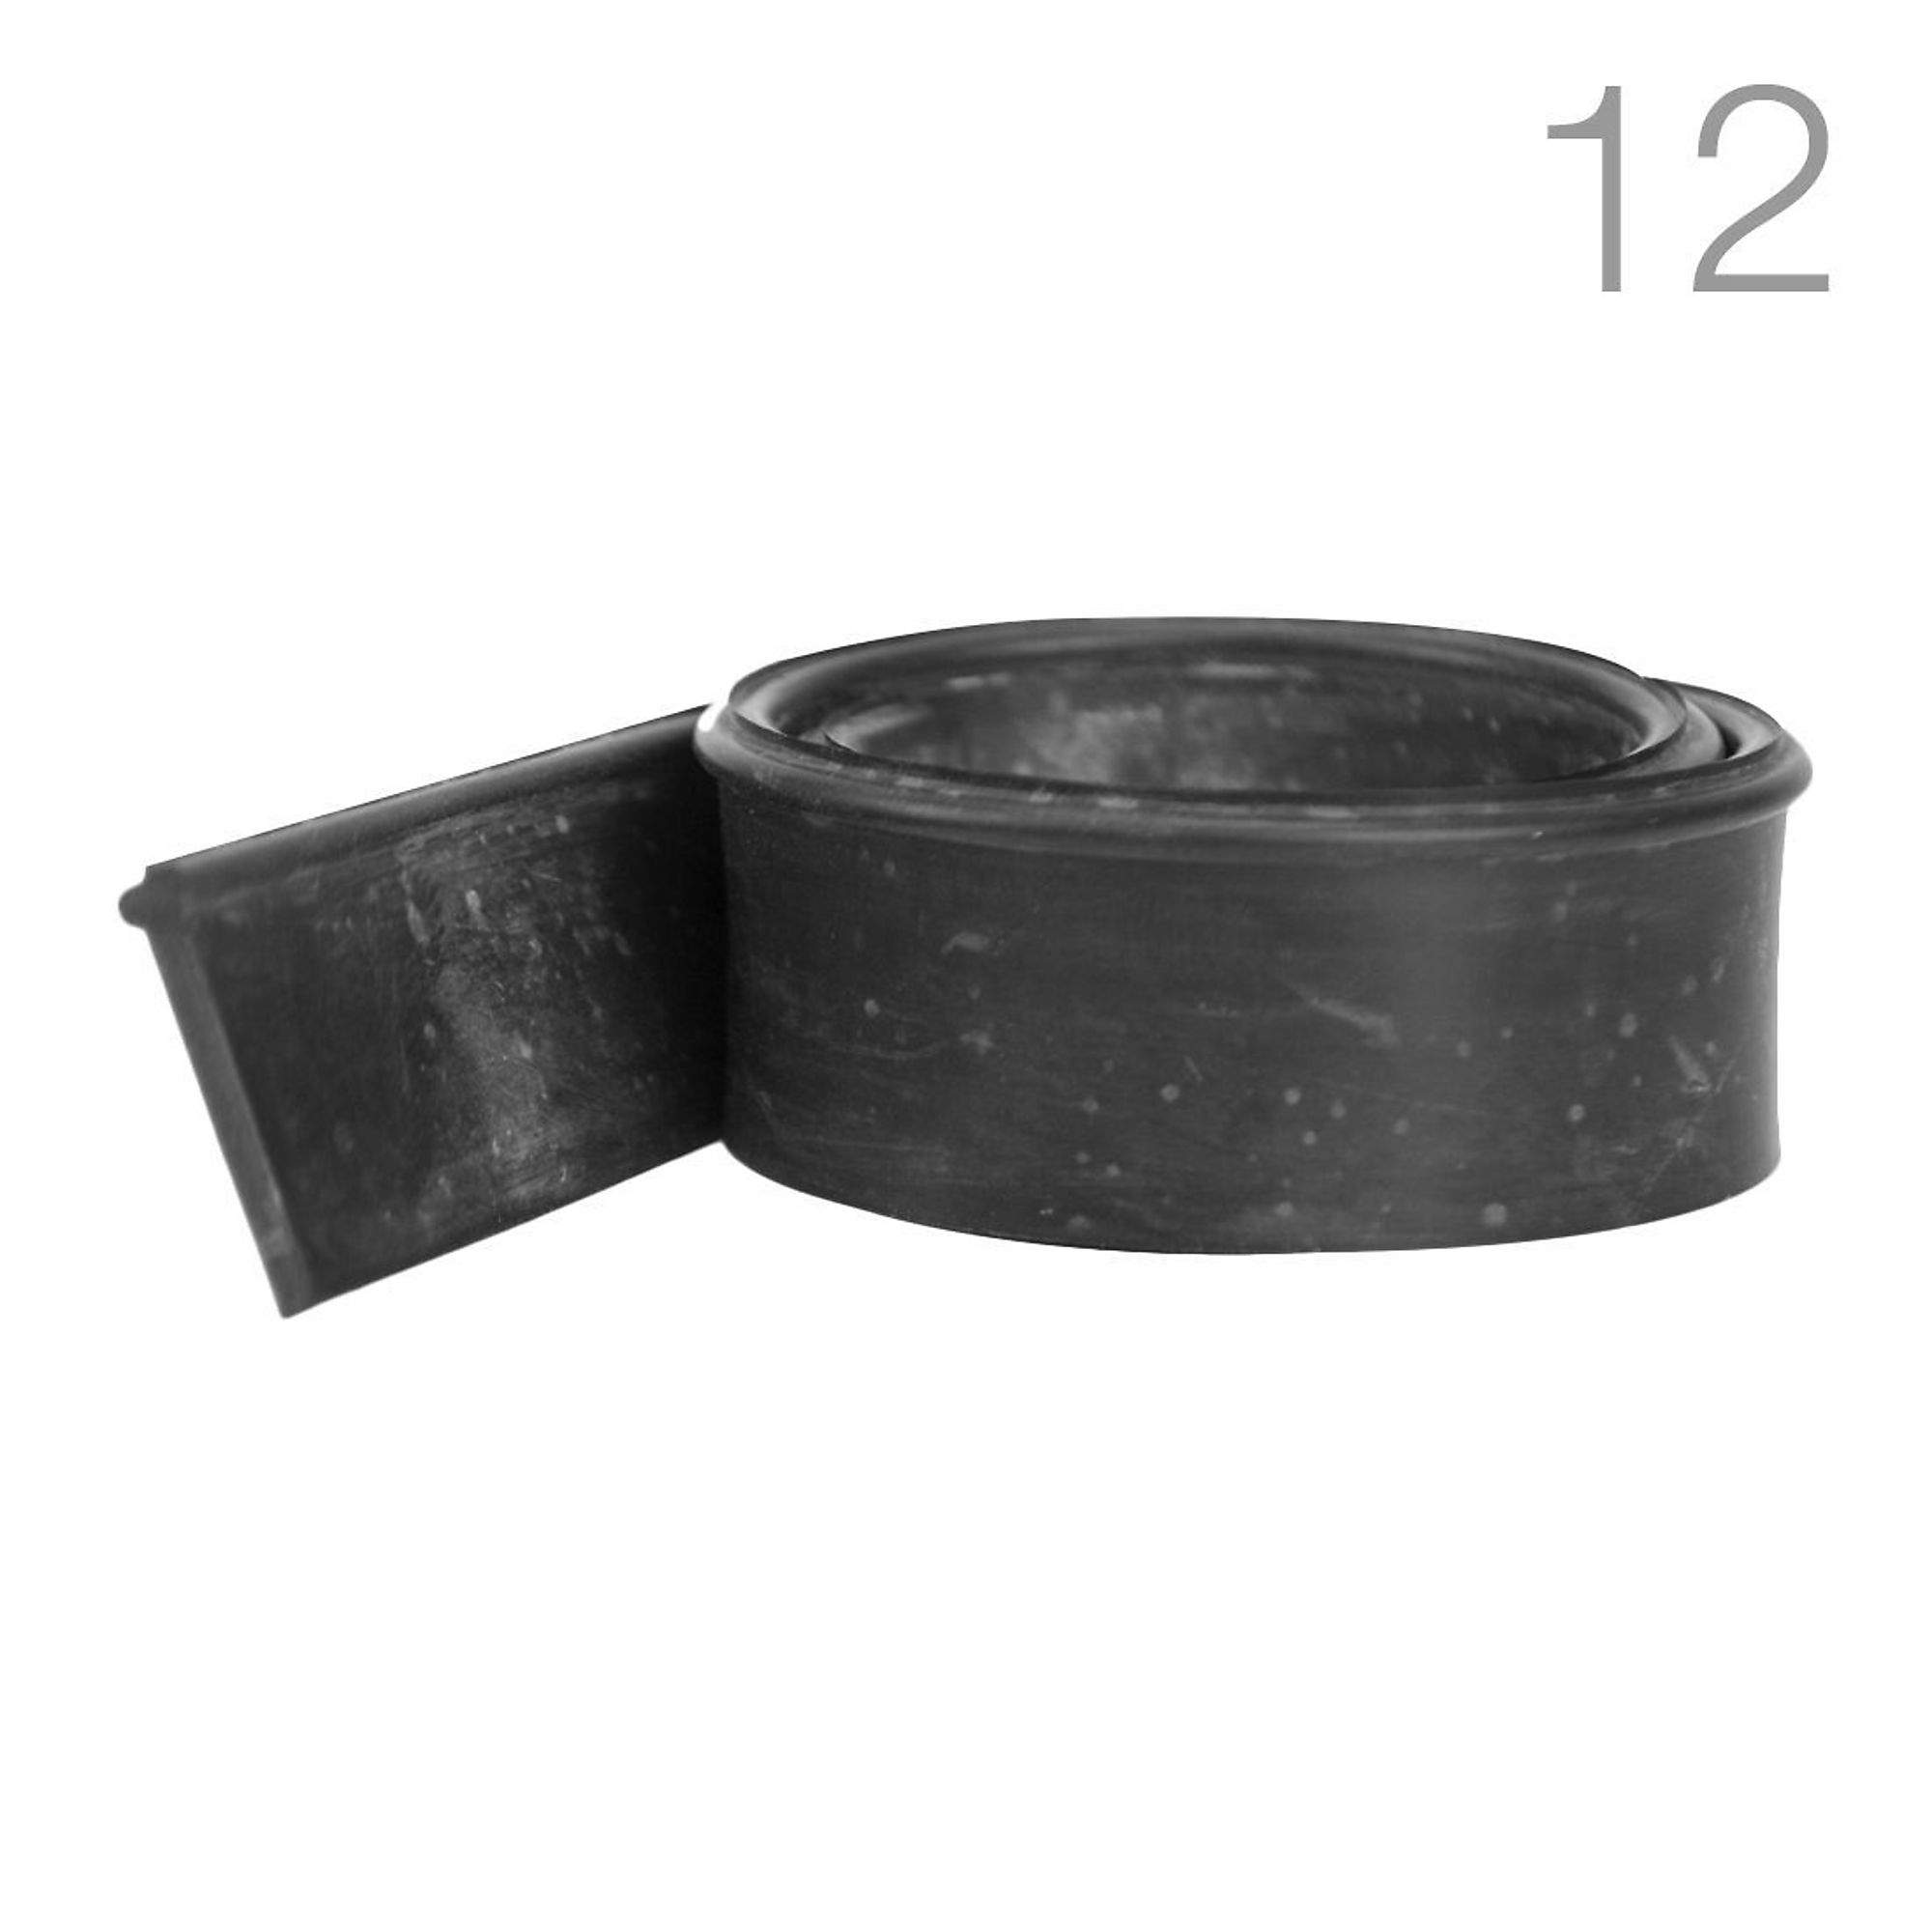 BlackDiamond, Flat Top Medium Squeegee Rubber 12 Pack - 18Inch, Model 012-05-49